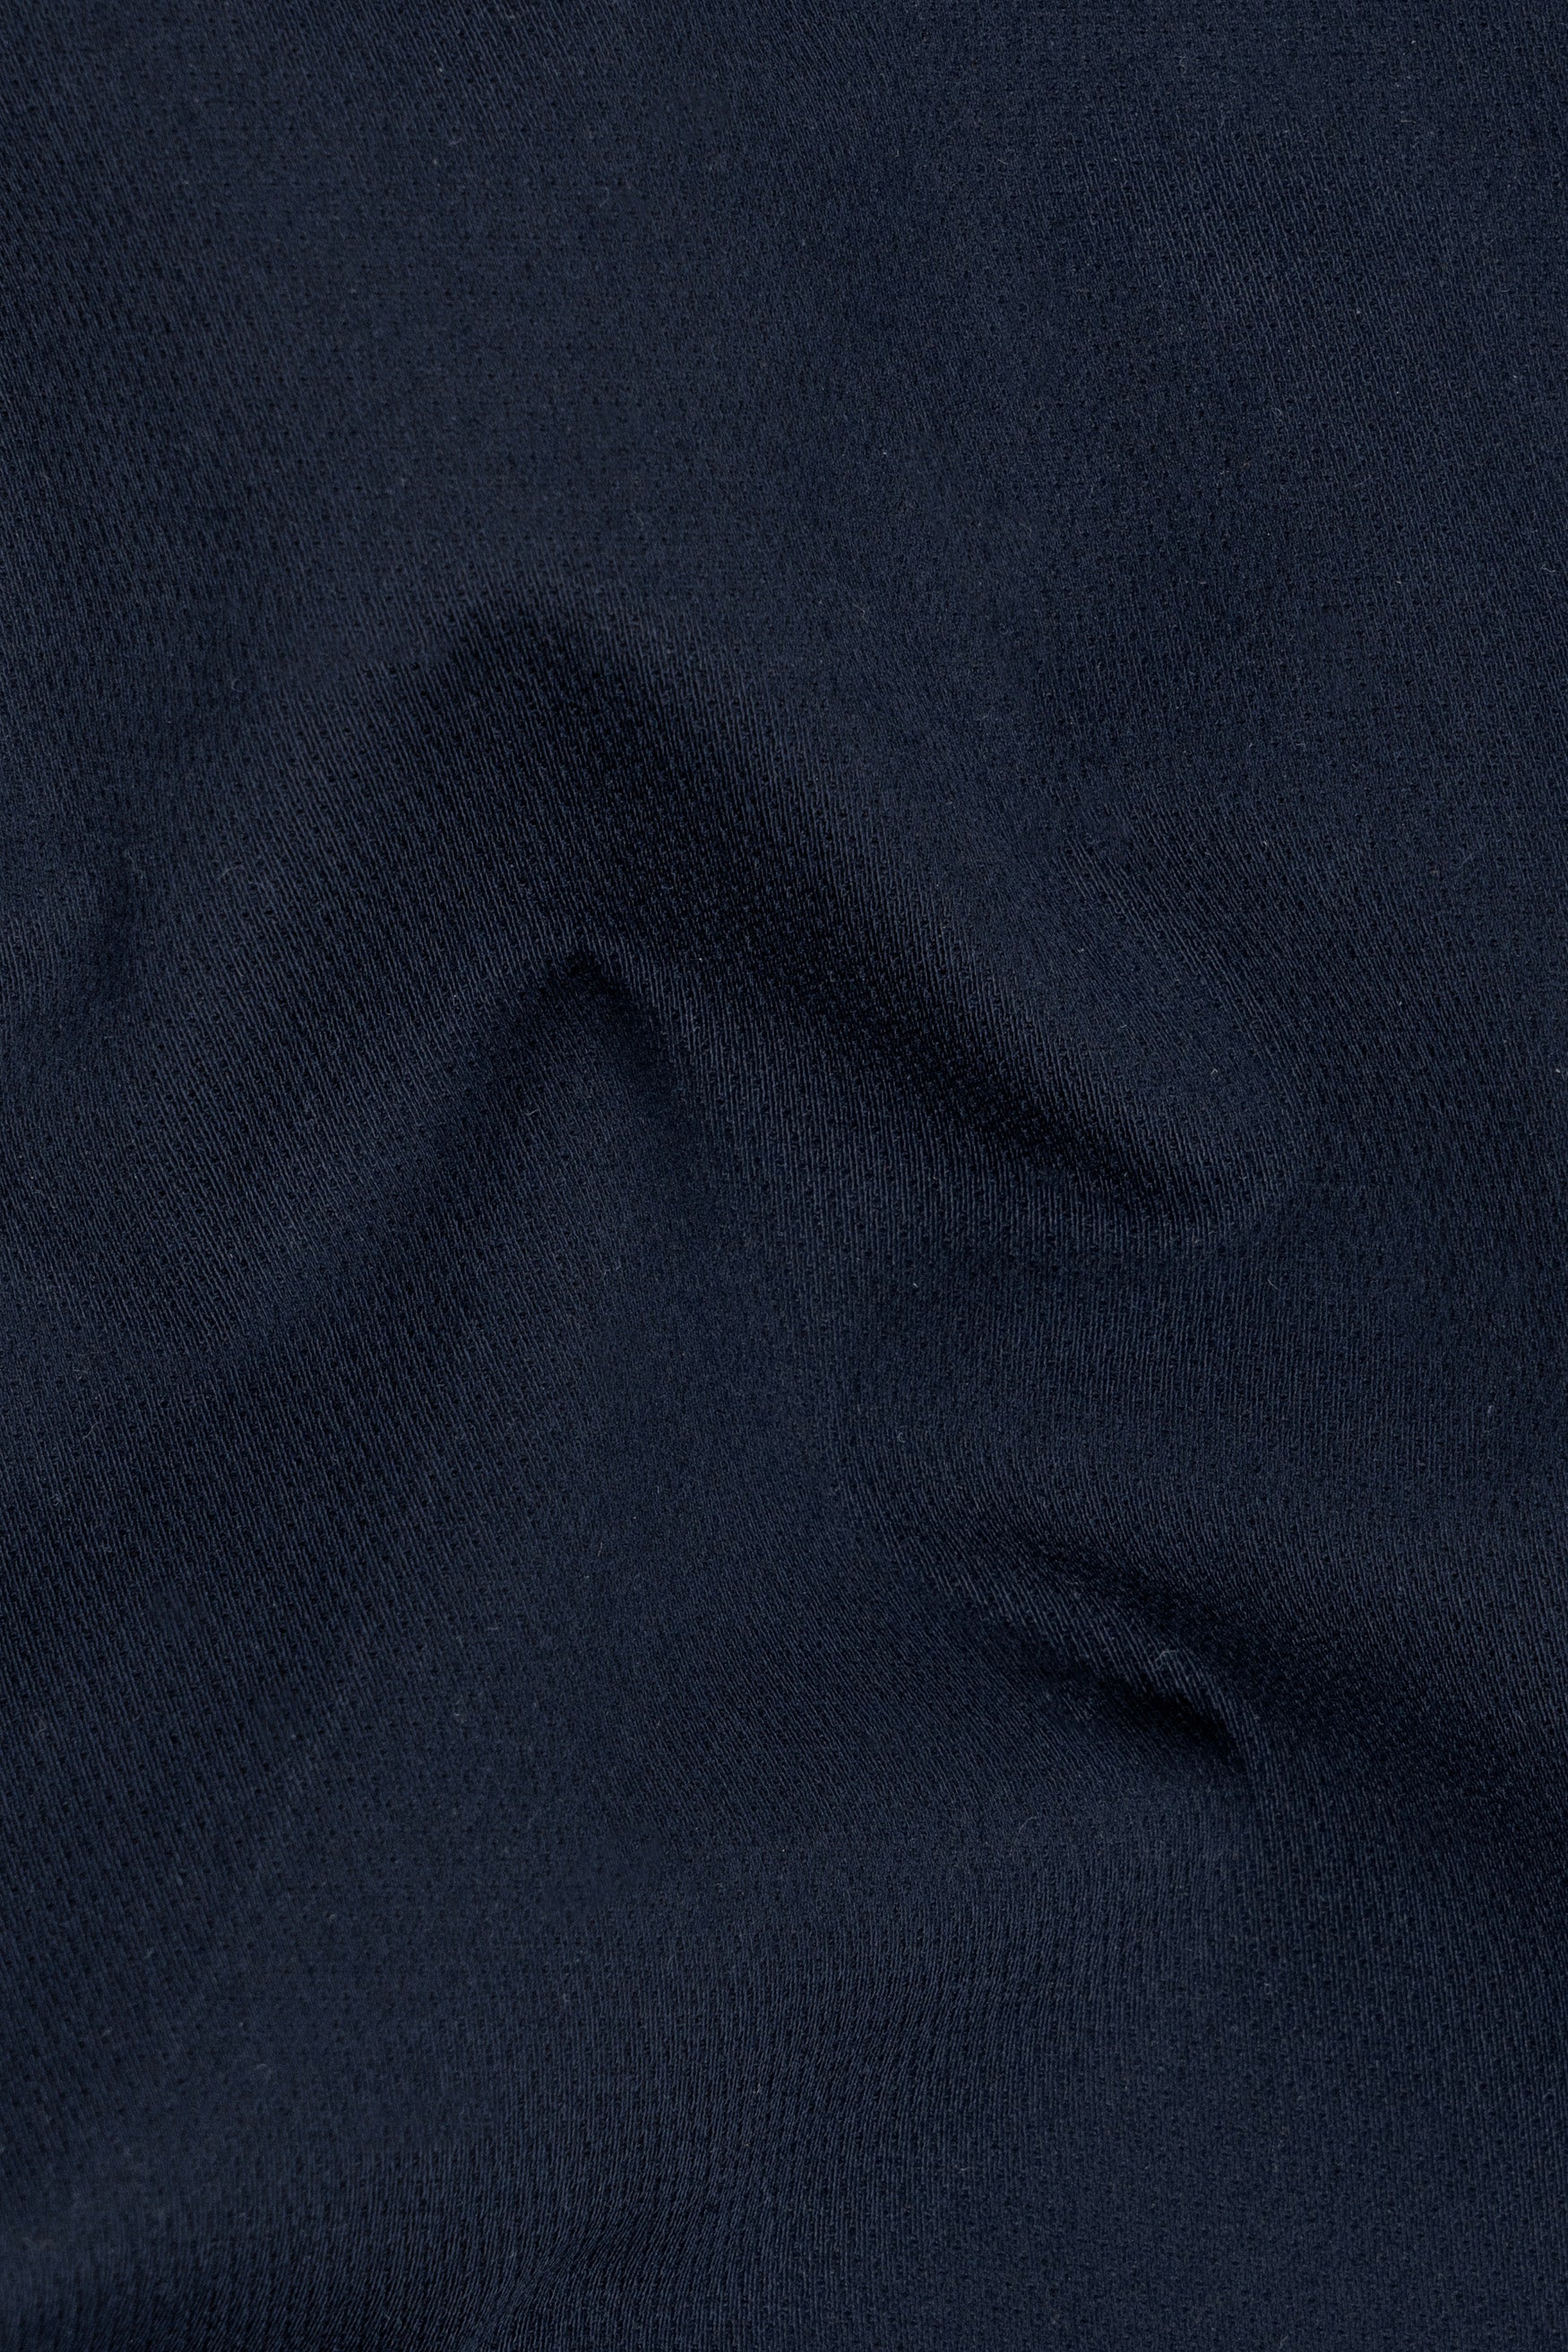 Mirage Blue Premium Cotton Chinos Pant